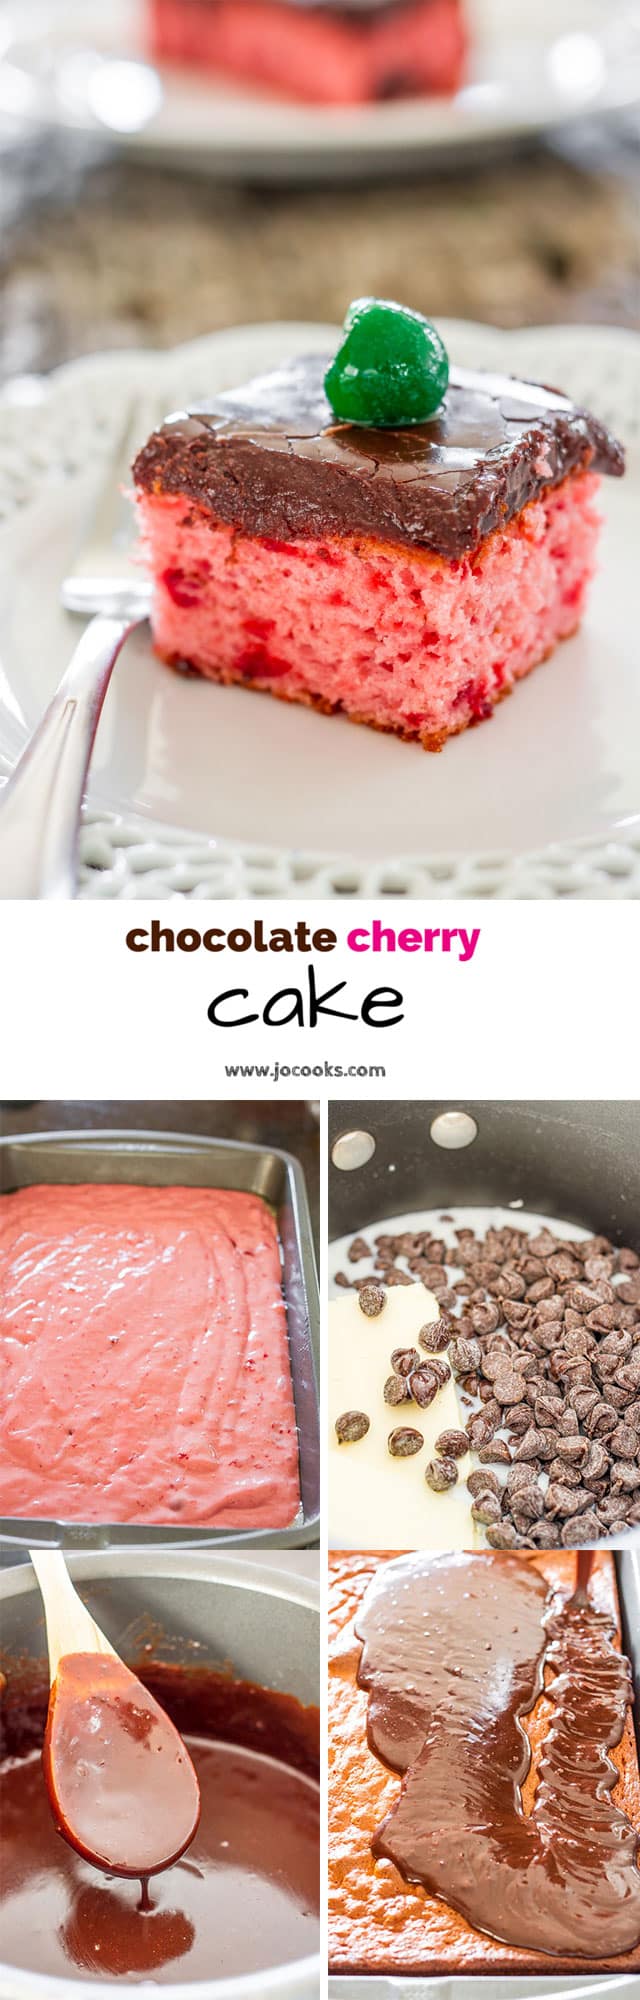 Chocolate Cherry Cake photo collage